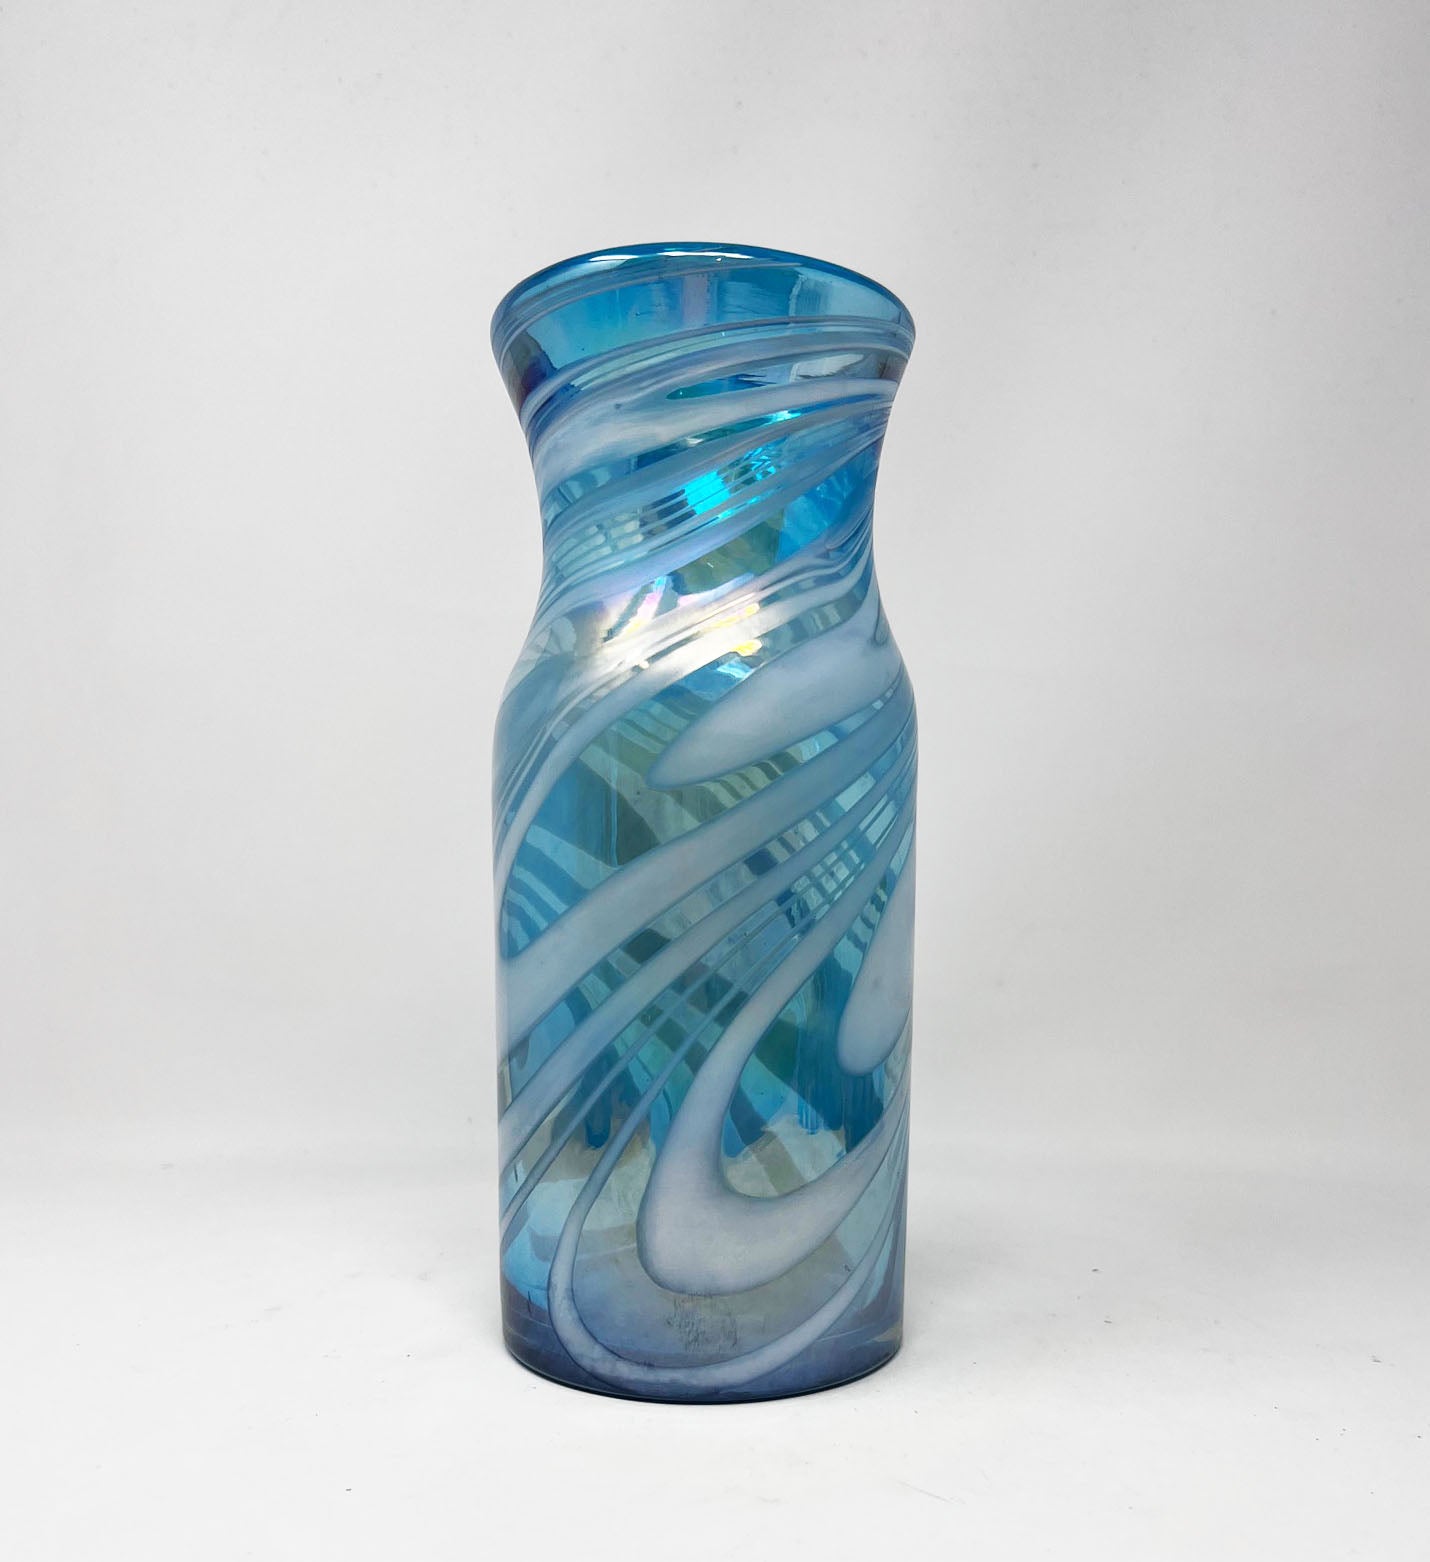 30 oz Hand Blown Glass Luc Pitcher / Vase -  Turquoise White Swirl Iridescent